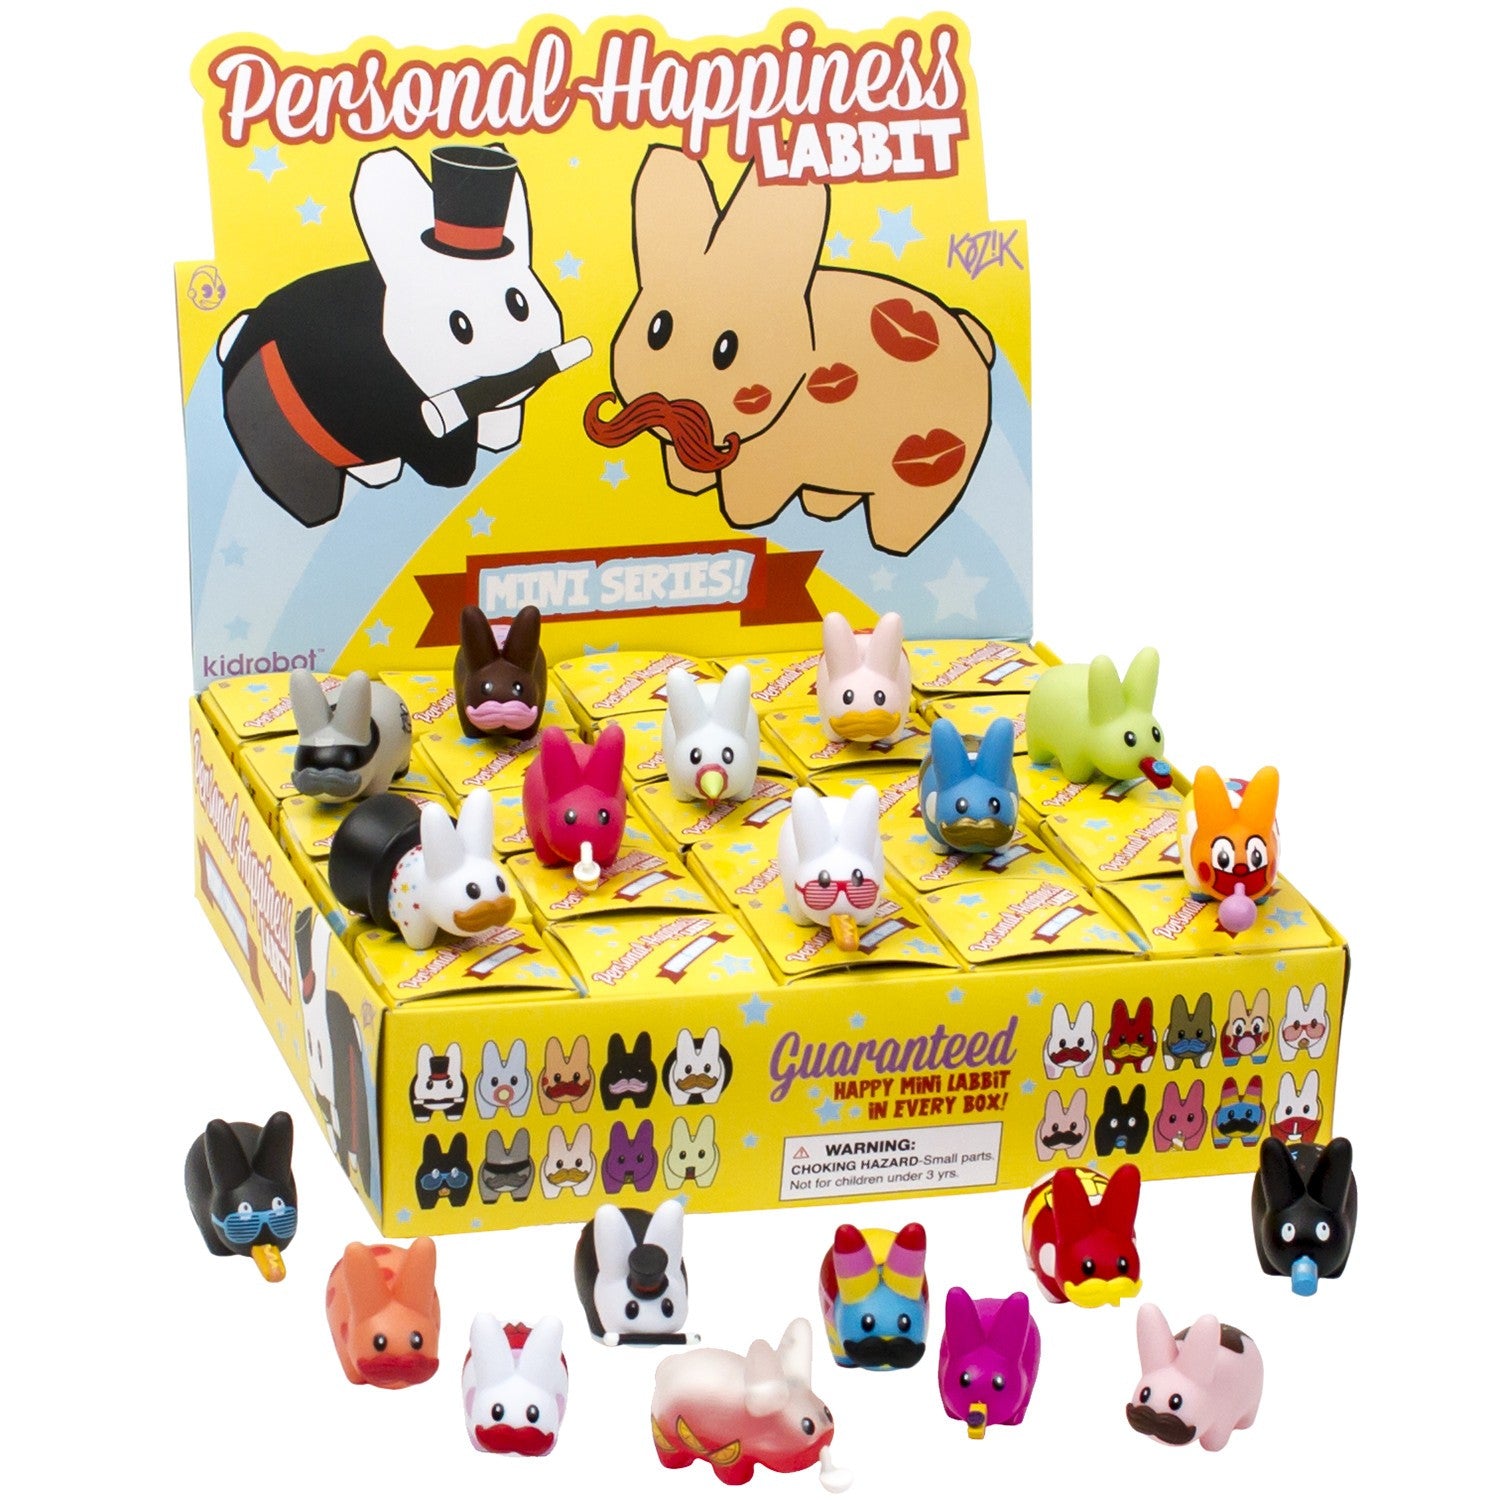 Personal Happiness 1.5" Happy Labbit Mini Series